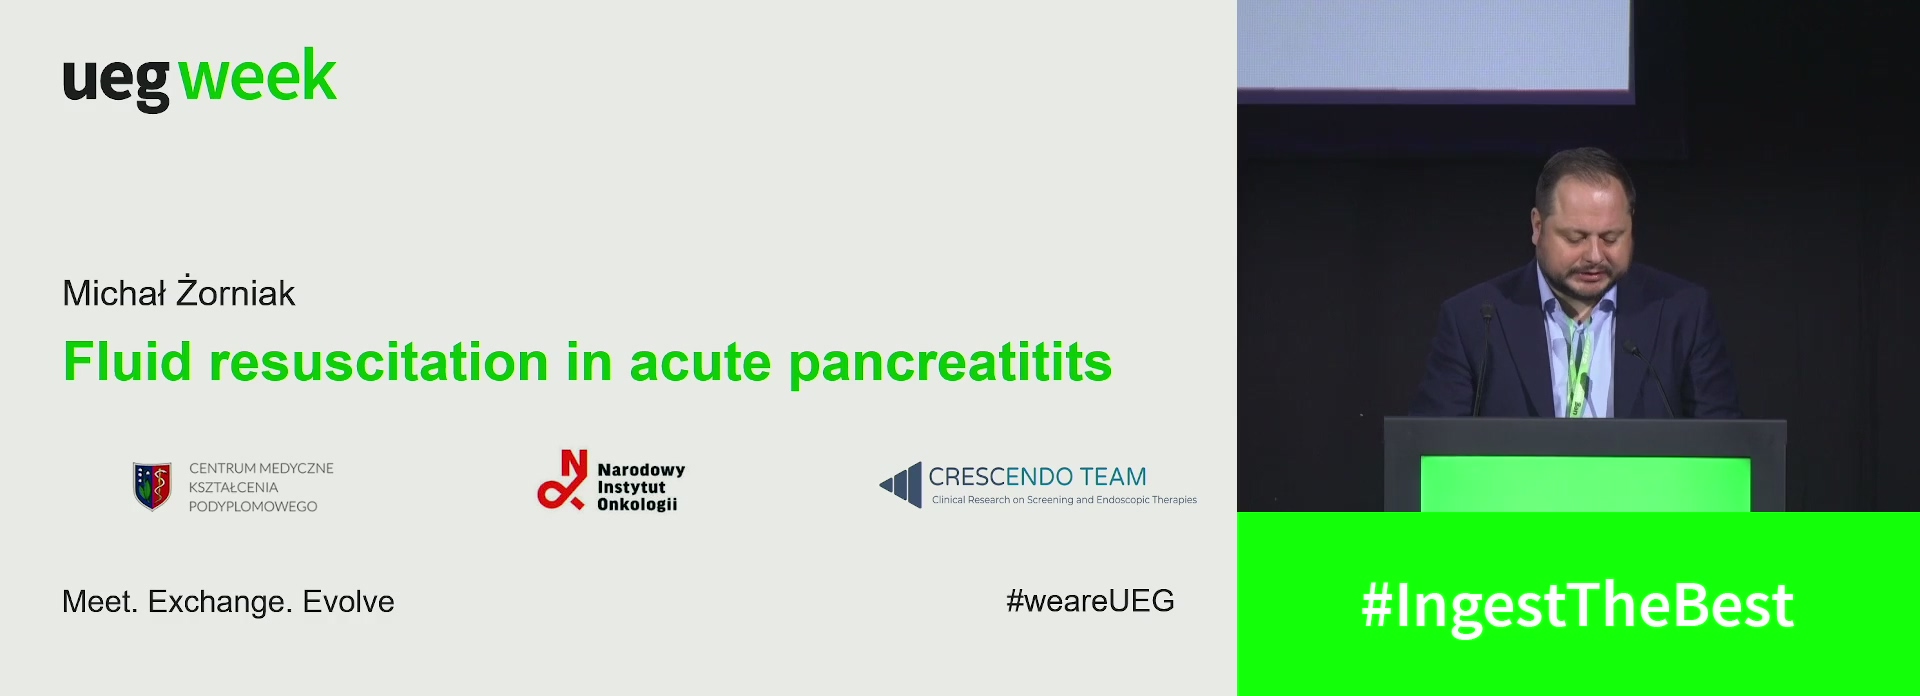 Fluid resuscitation in acute pancreatitis